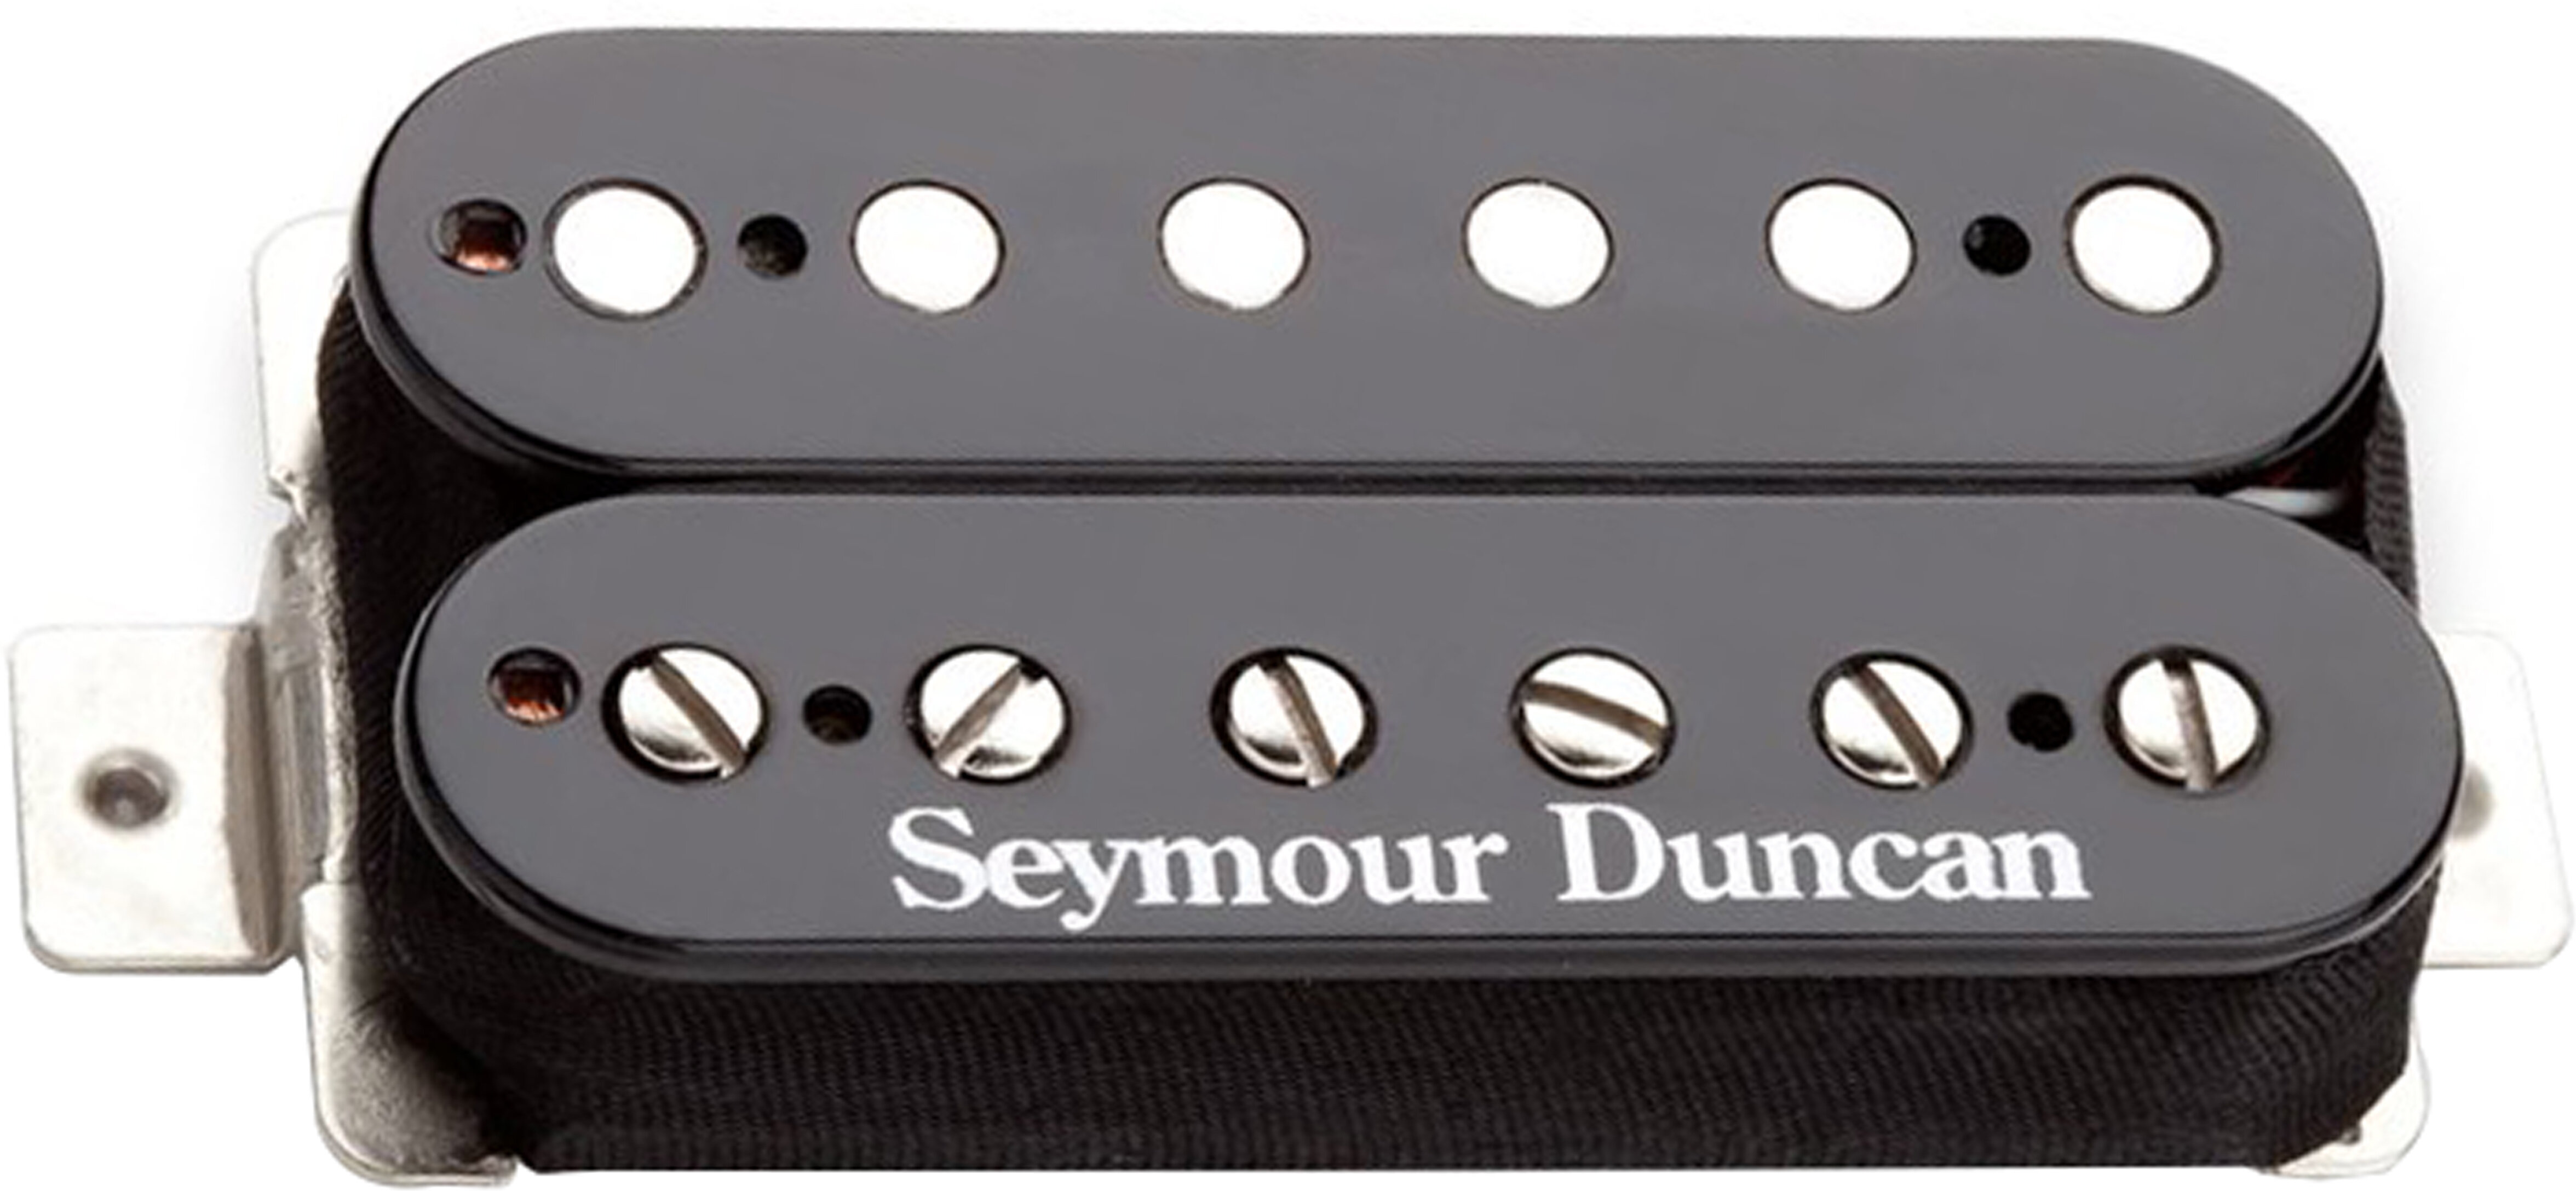 Seymour Duncan 11101-05-B4c